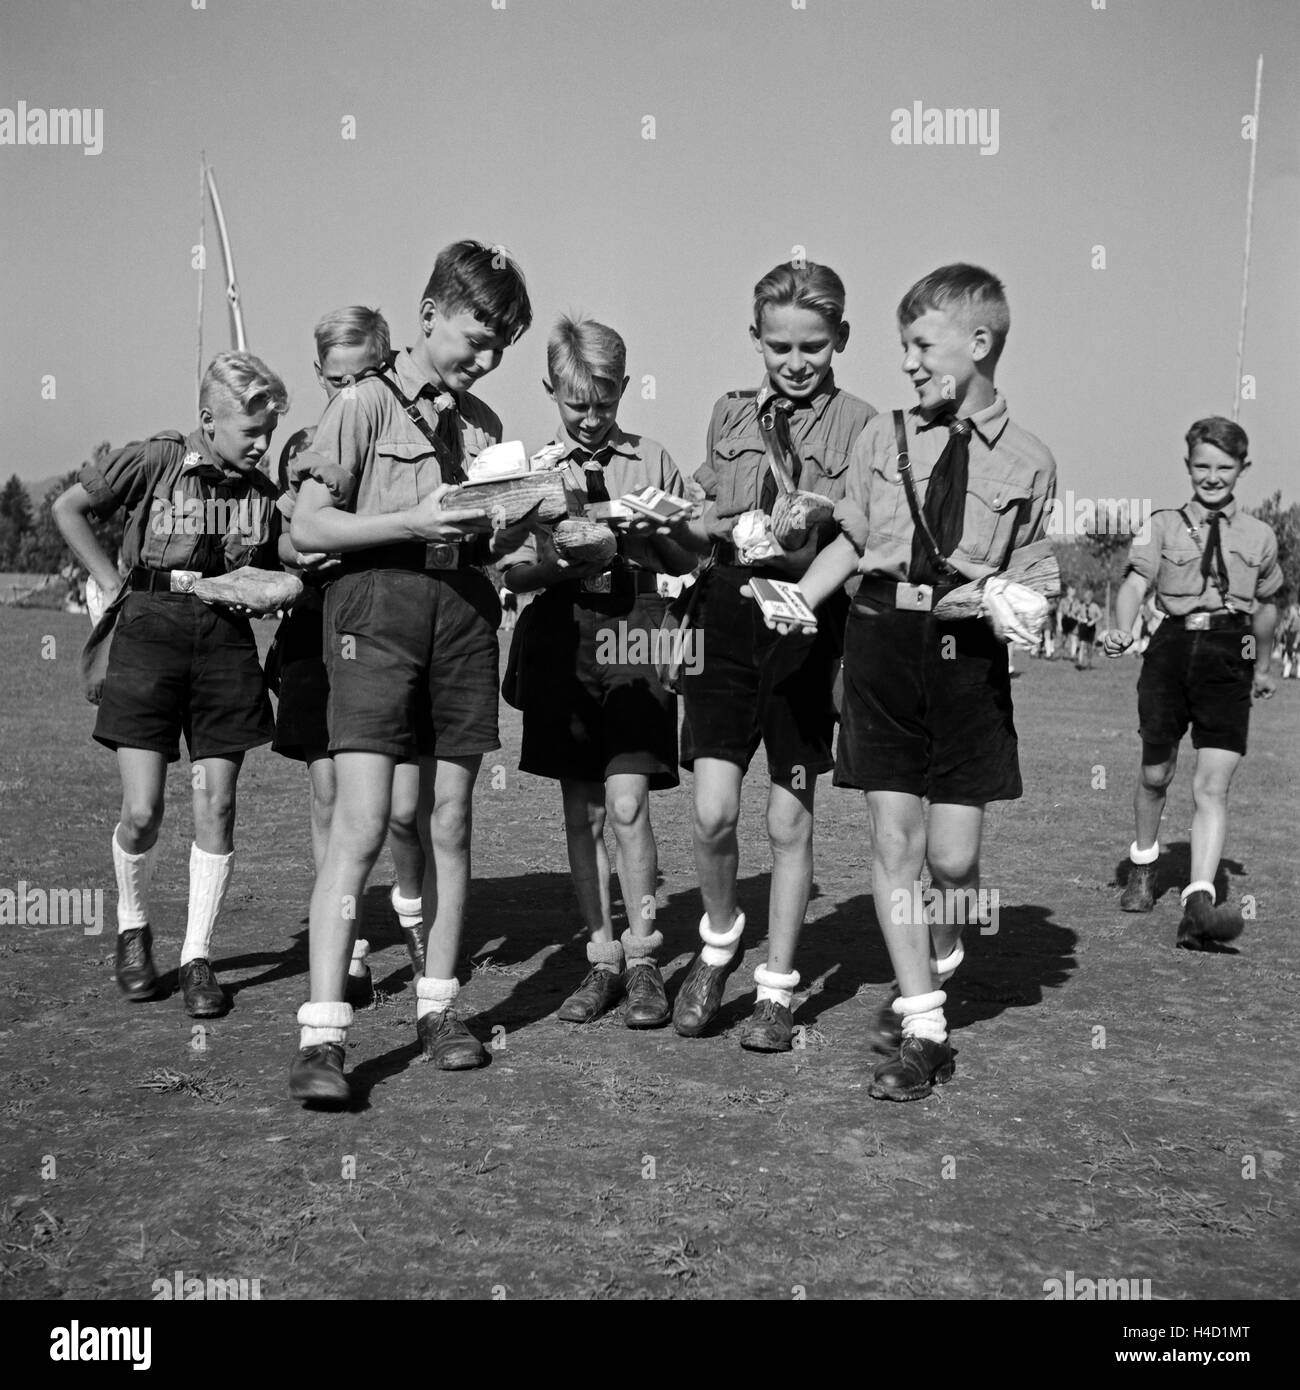 Hitlerjungen bei der Brotausgabe im Hitlerjugend Lager, Österreich 1930er Jahre. Hitler youths getting fresh bread and cocoa at the Hitler youth camp, Austria 1930s. Stock Photo